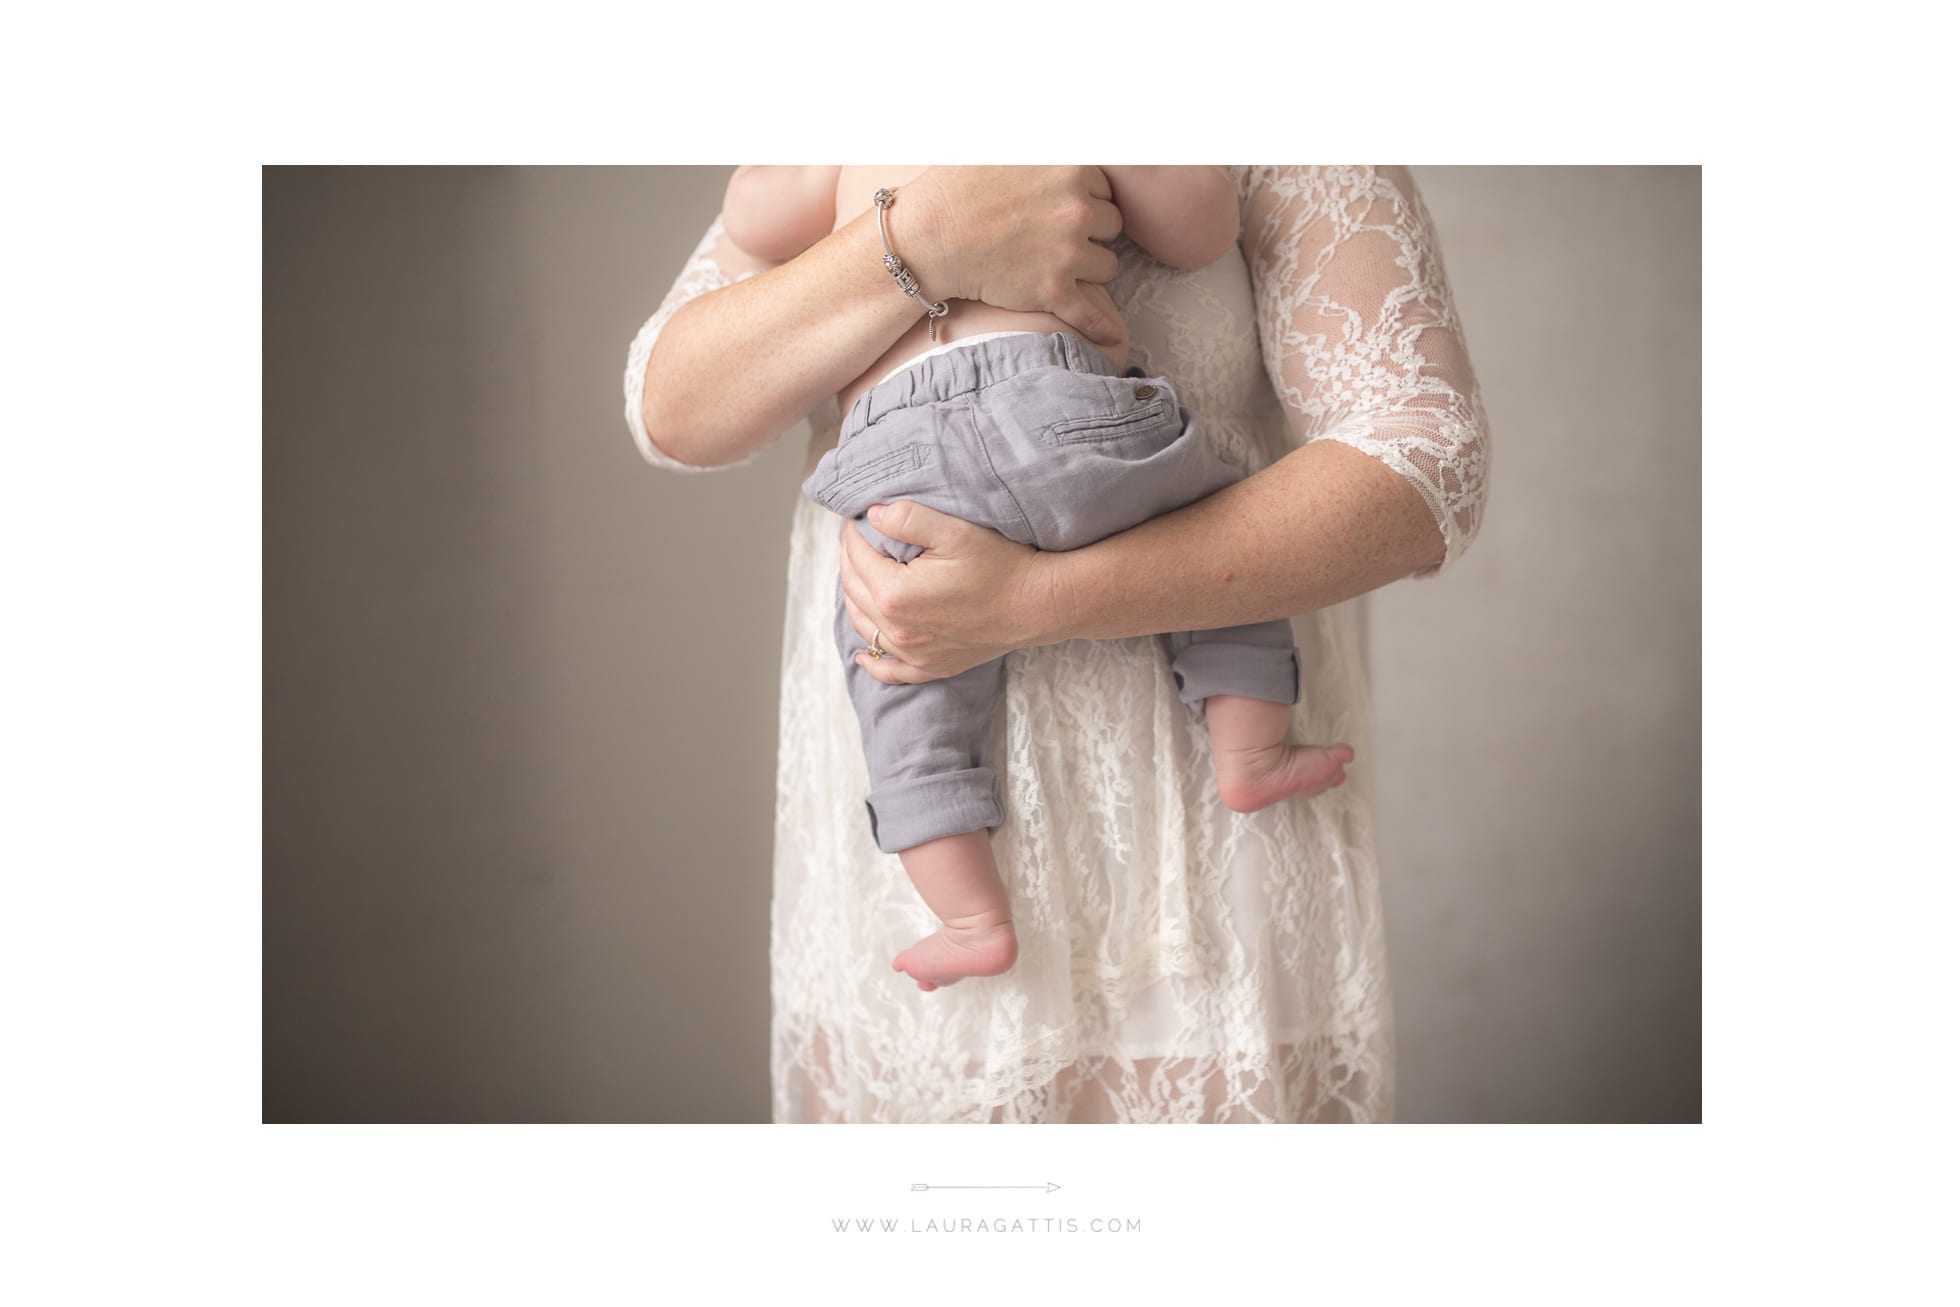 creamy natural light studio baby milestone session | laura gattis photography